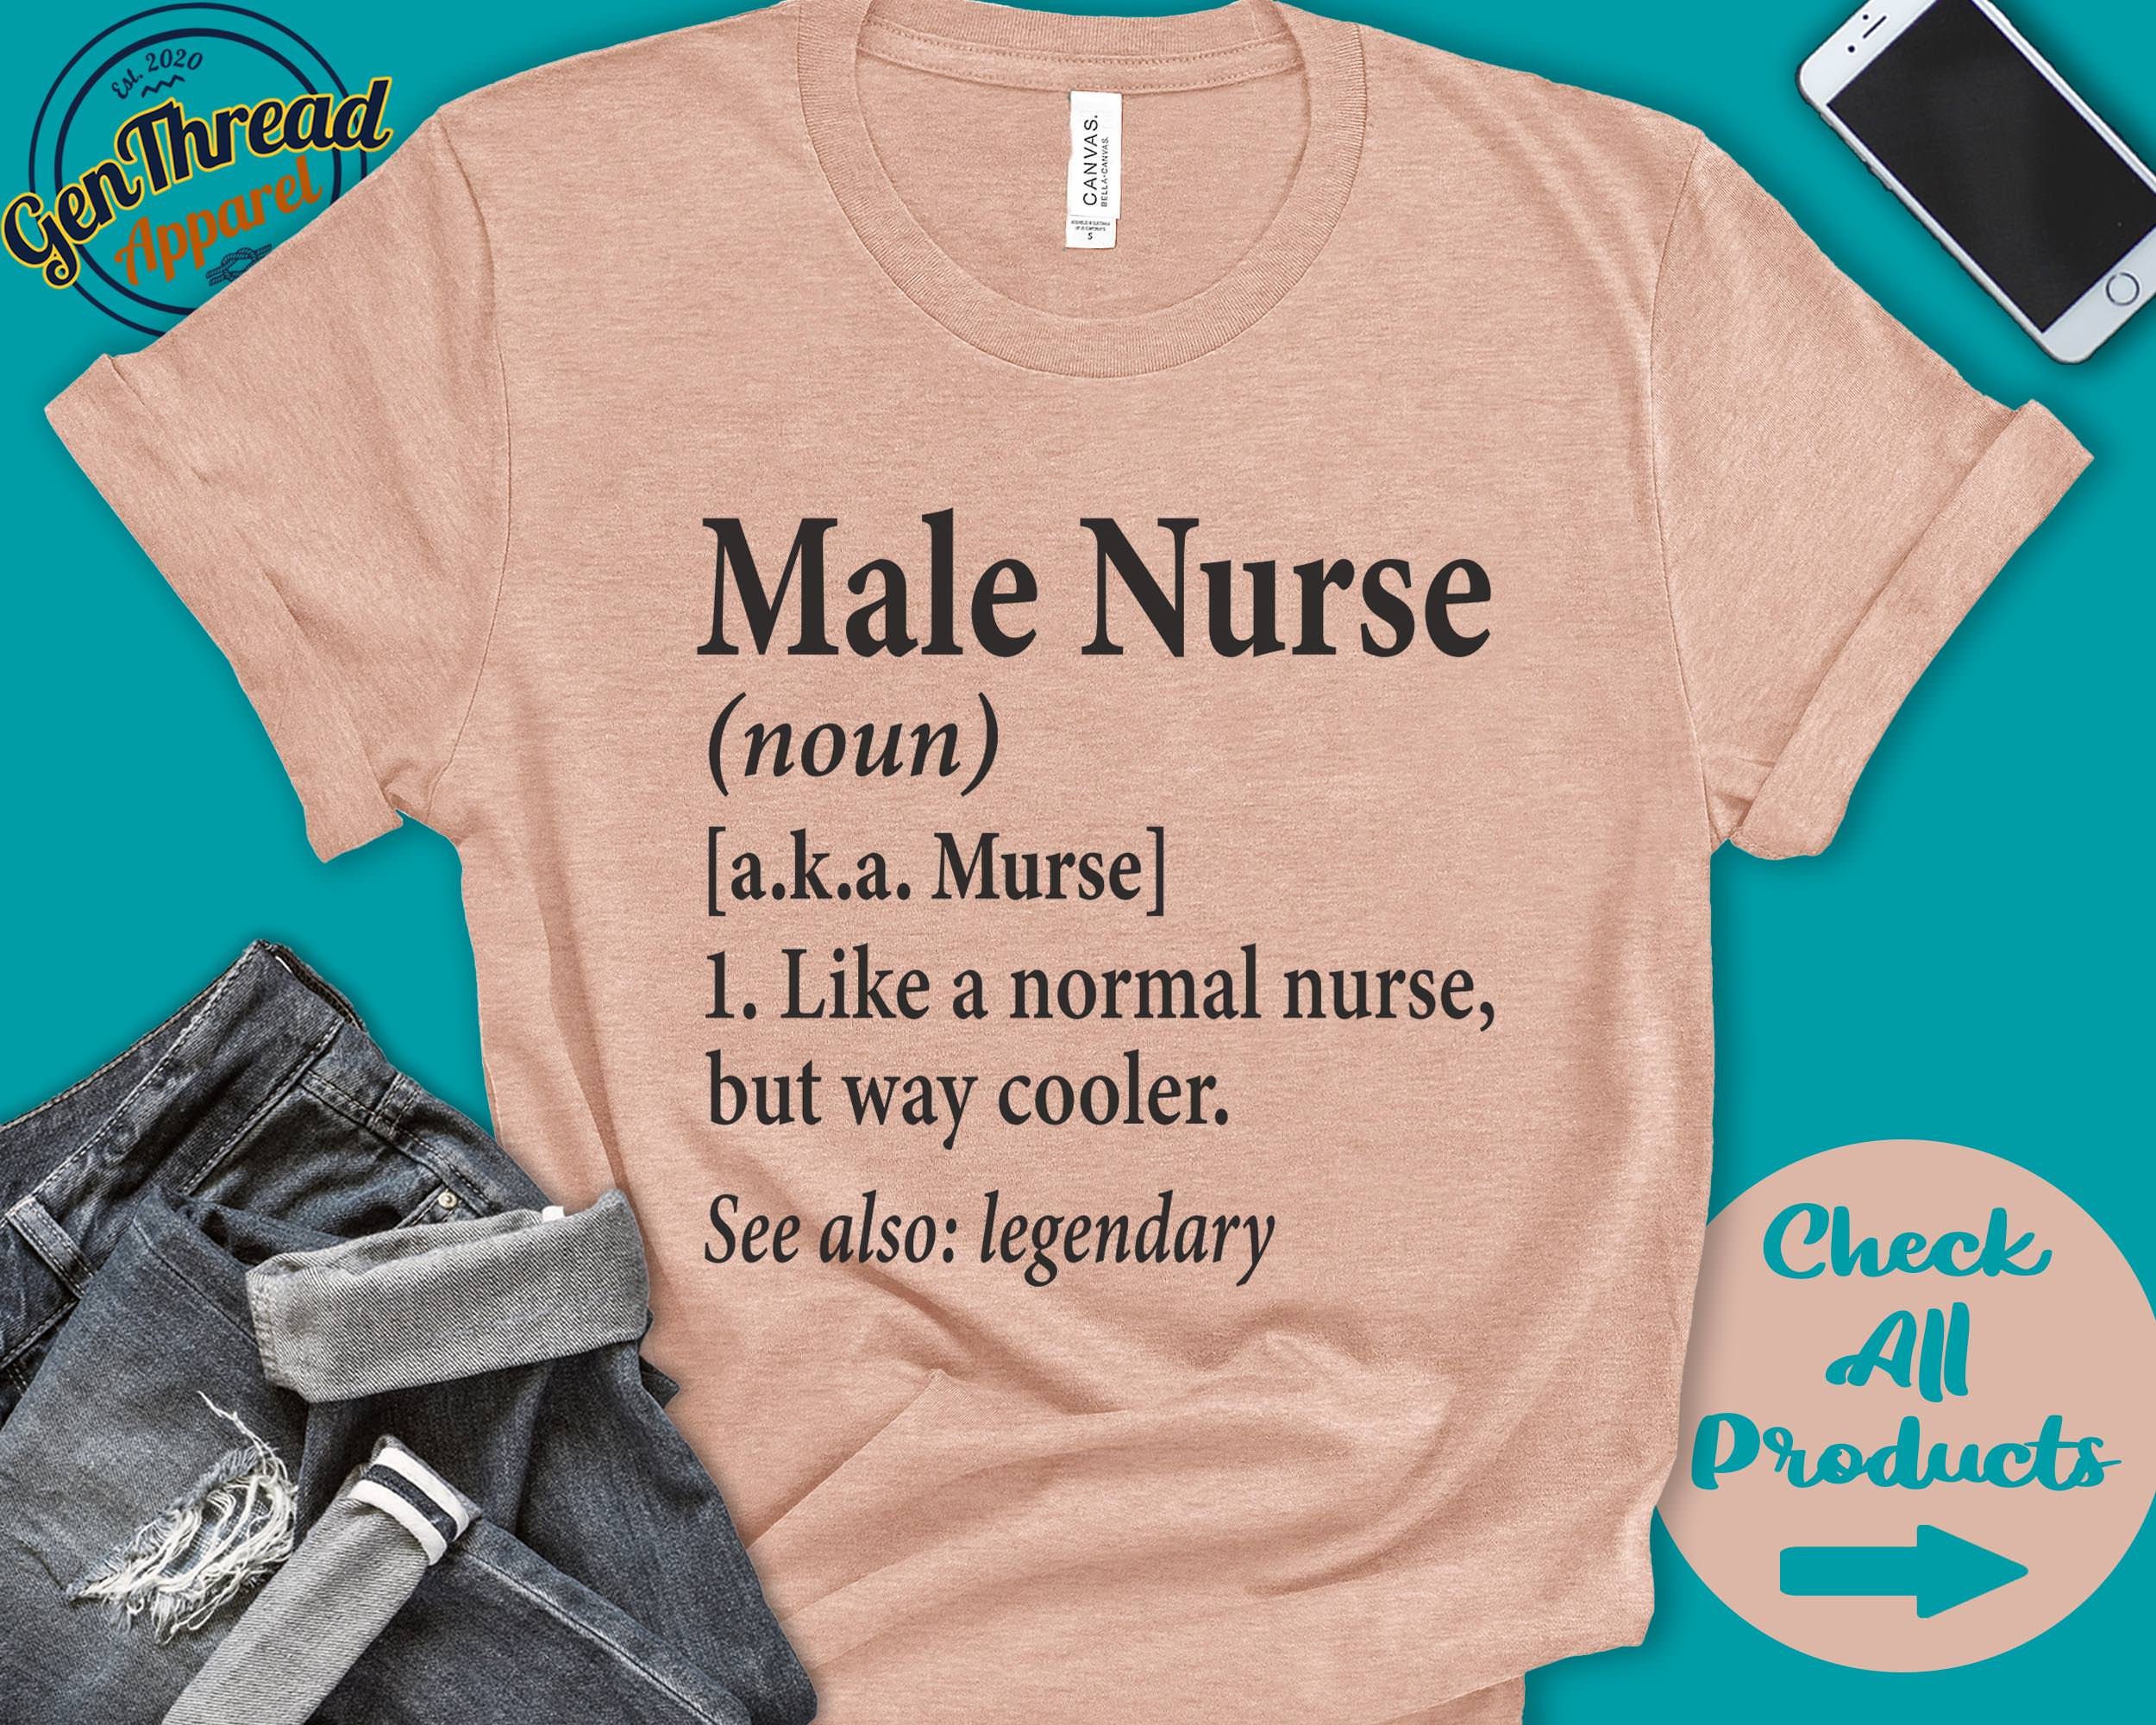 Male Nurse Shirt Male Nurse Gift Murse Gift Funny Male Nurse Murse Tee Male  Nursing Tank Top Hoodie A0511 -  Australia